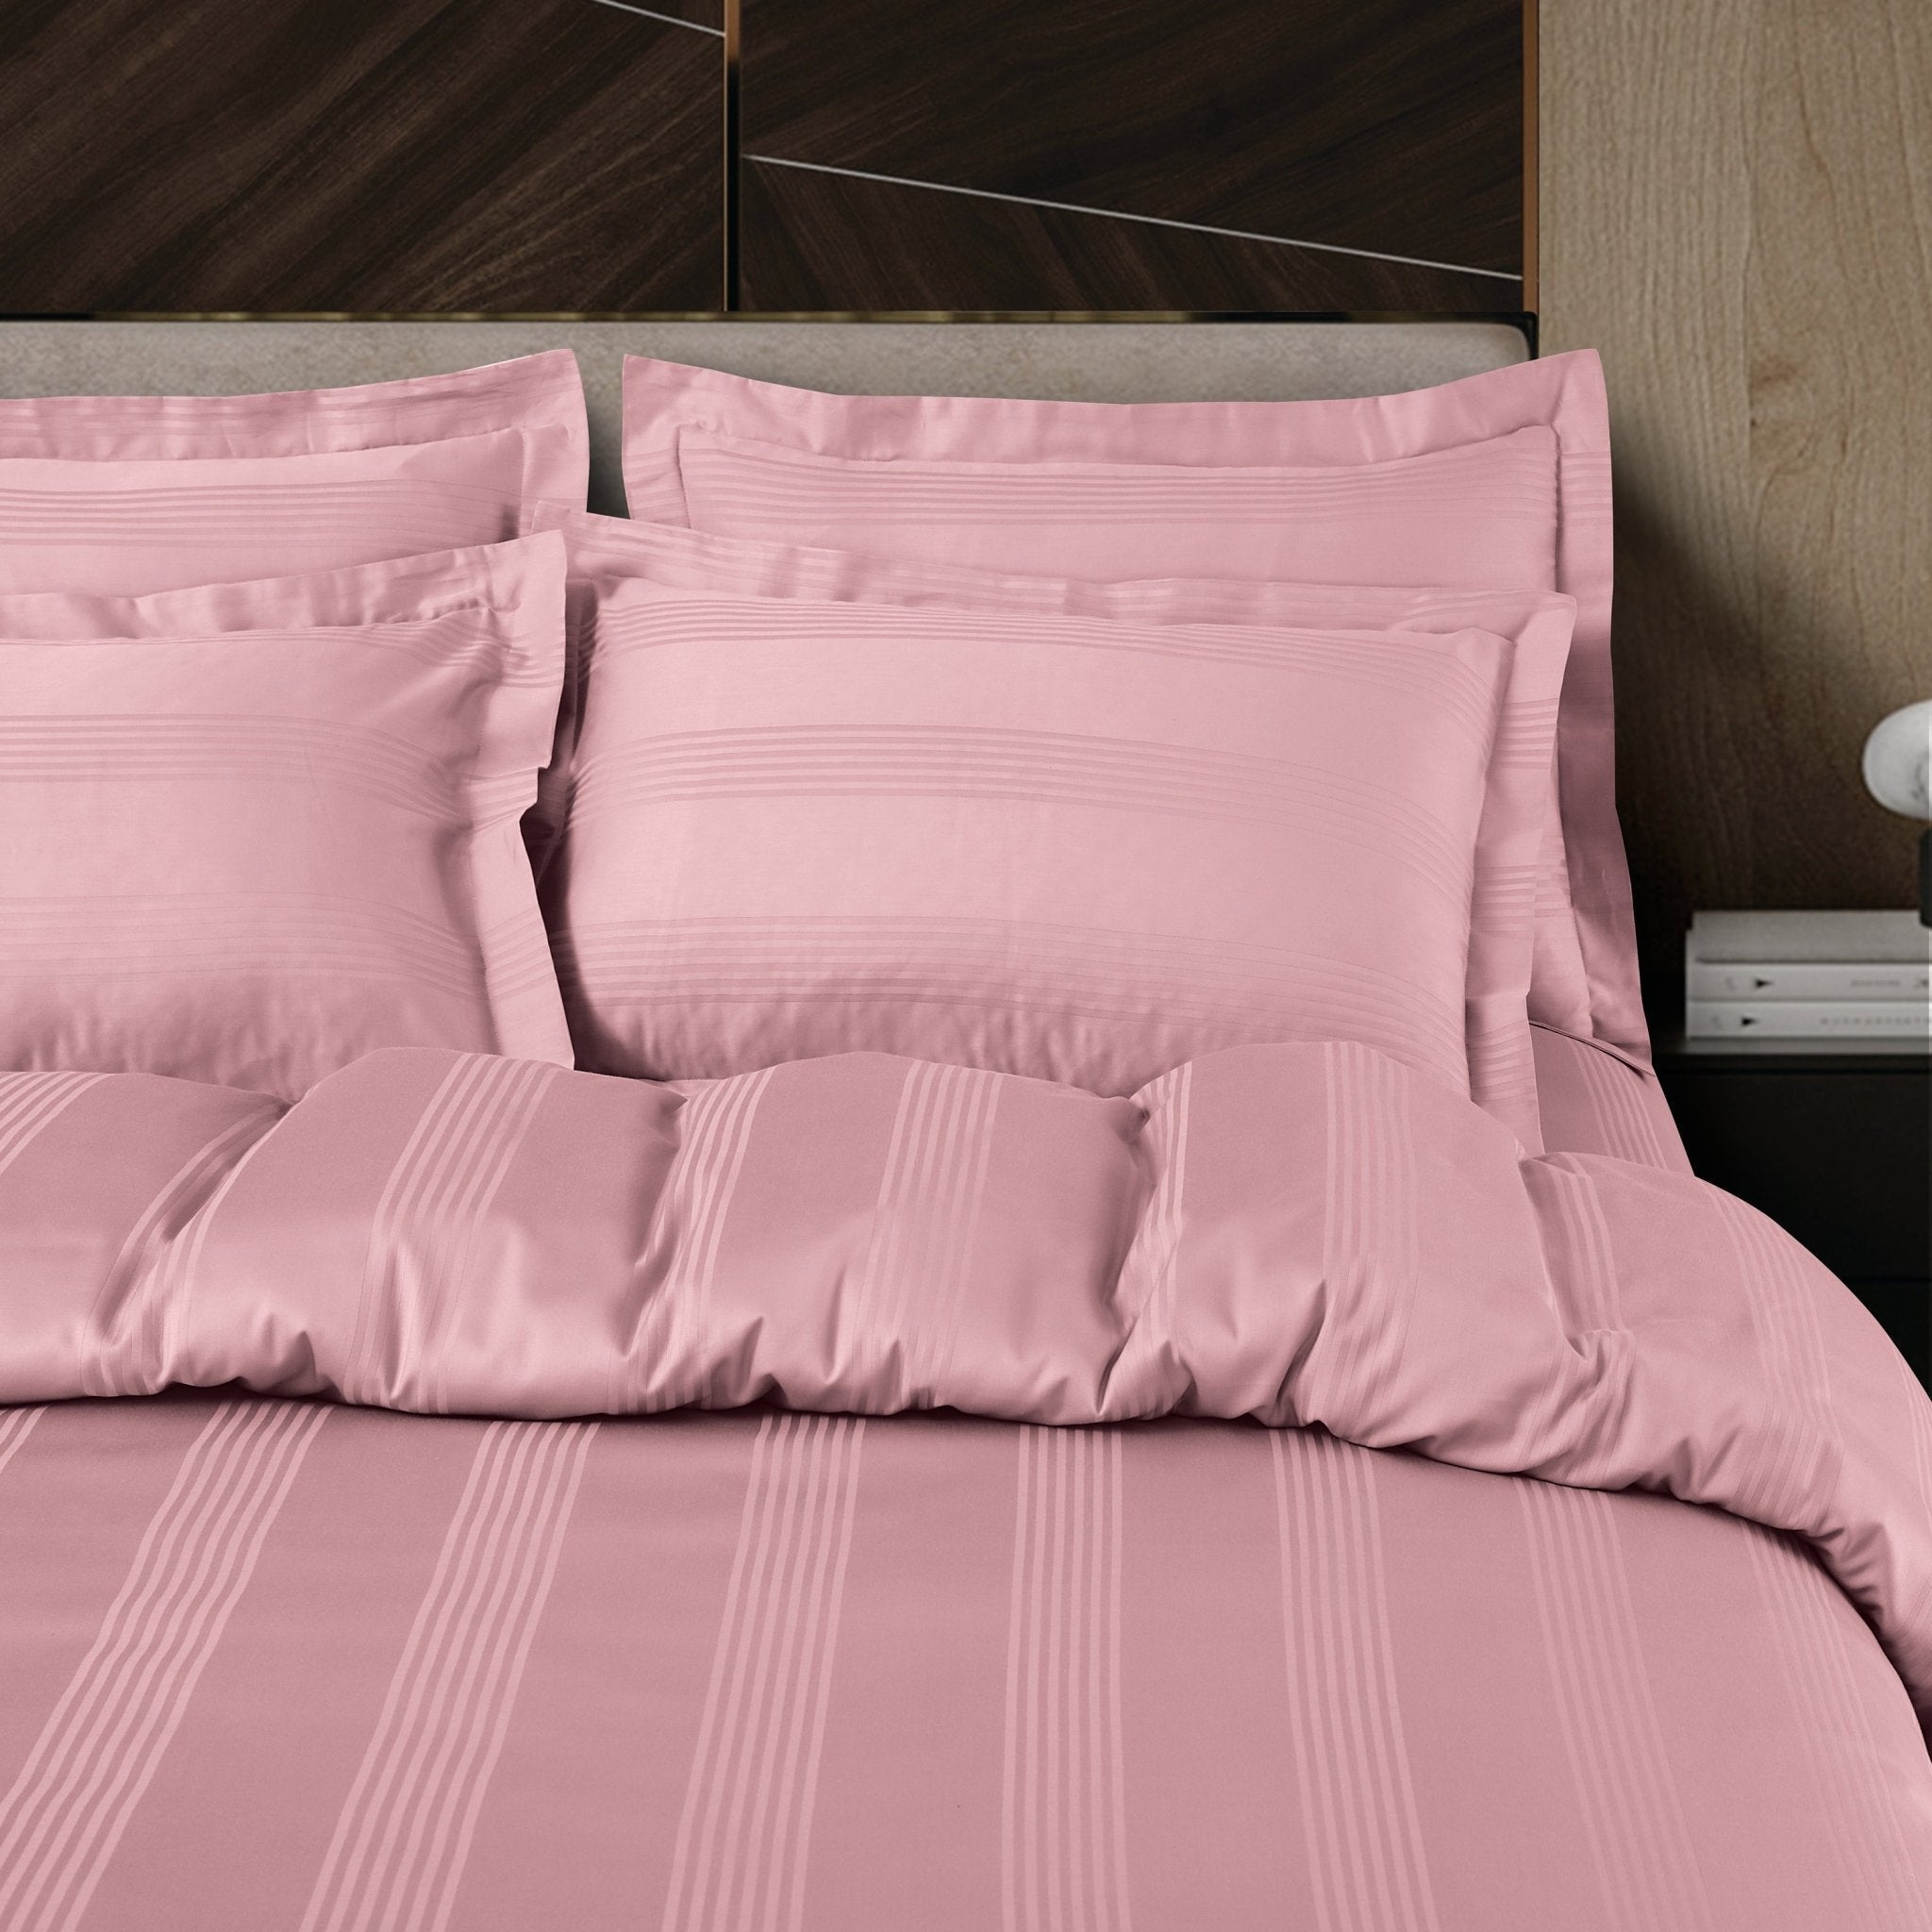 Malako Turin Jacquard Rose Pink Stripes 450 TC 100% Cotton King Size 7 Piece Duvet Cover Set - MALAKO